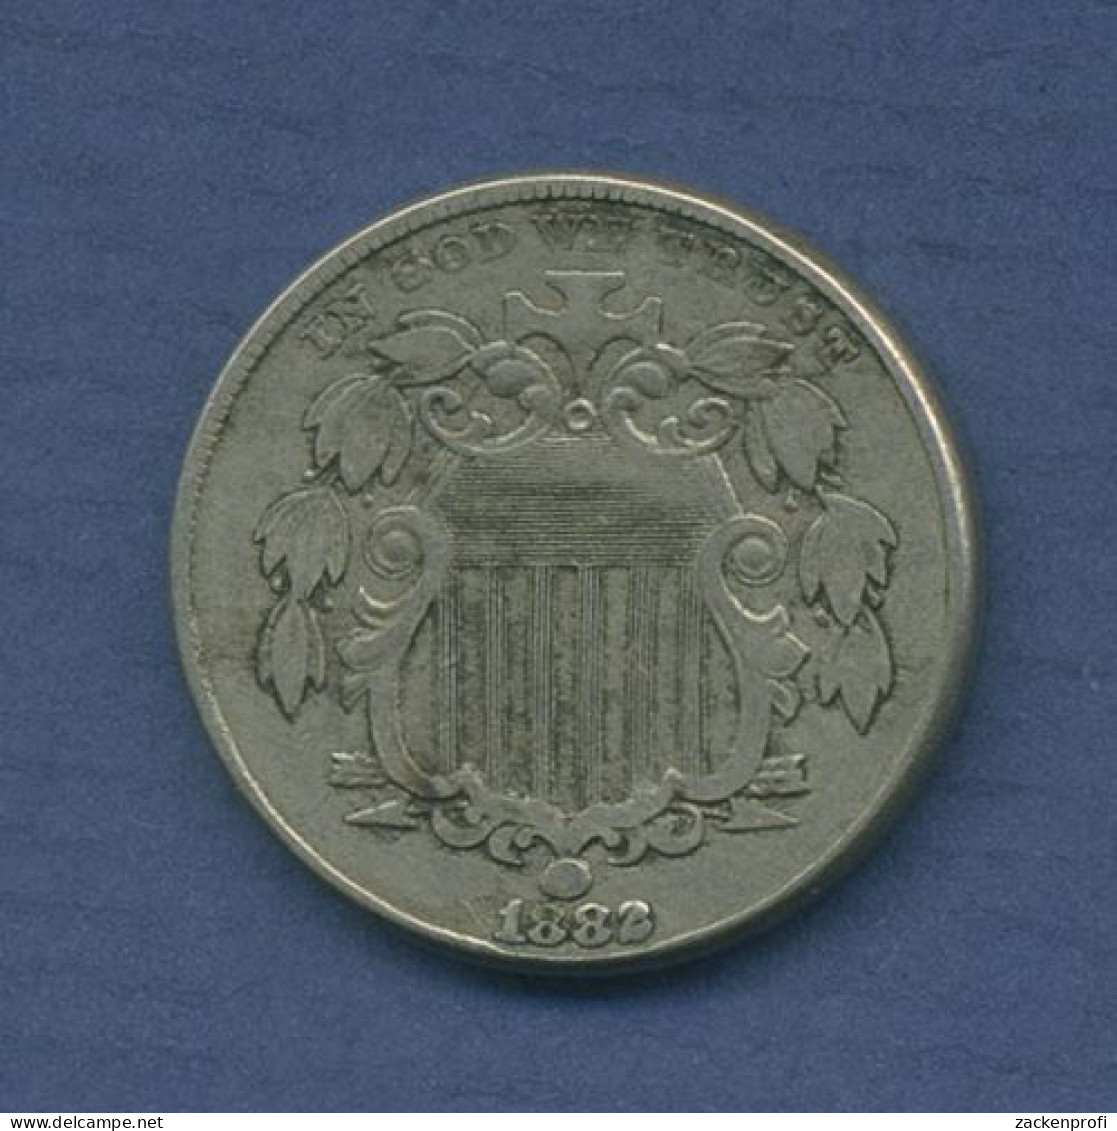 USA Nickel 5 Cents Shield Nickel 1882, KM 97 Sehr Schön (m3367) - 1866-83: Escudo